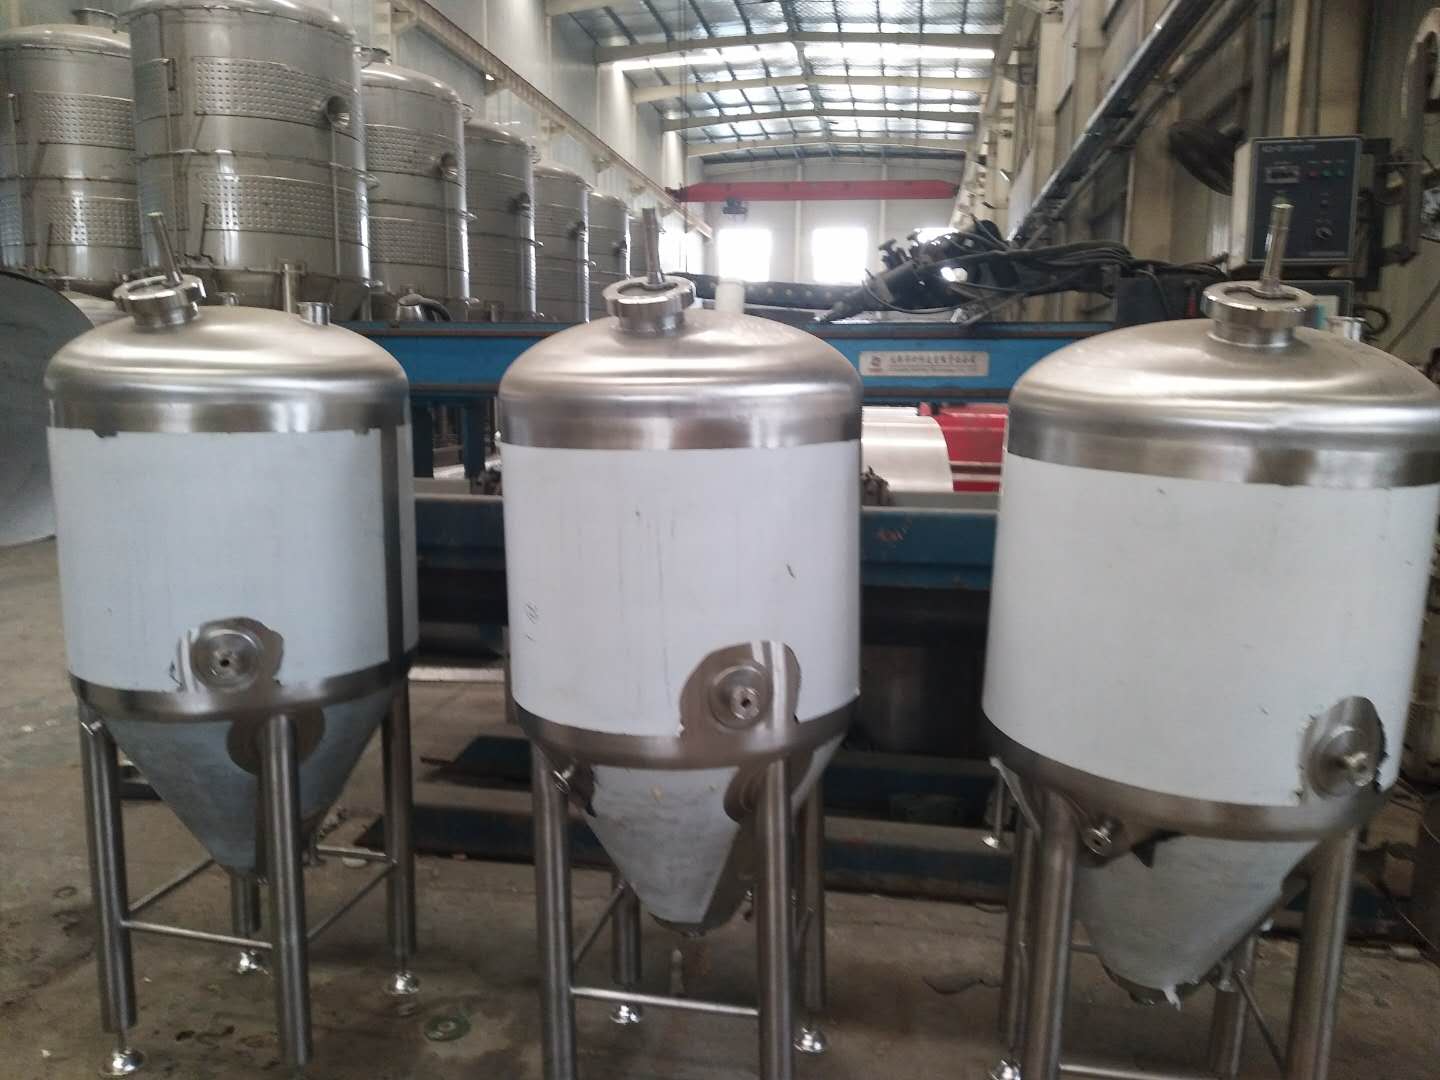   Commercial  mirror polishing fermentation tanks ...